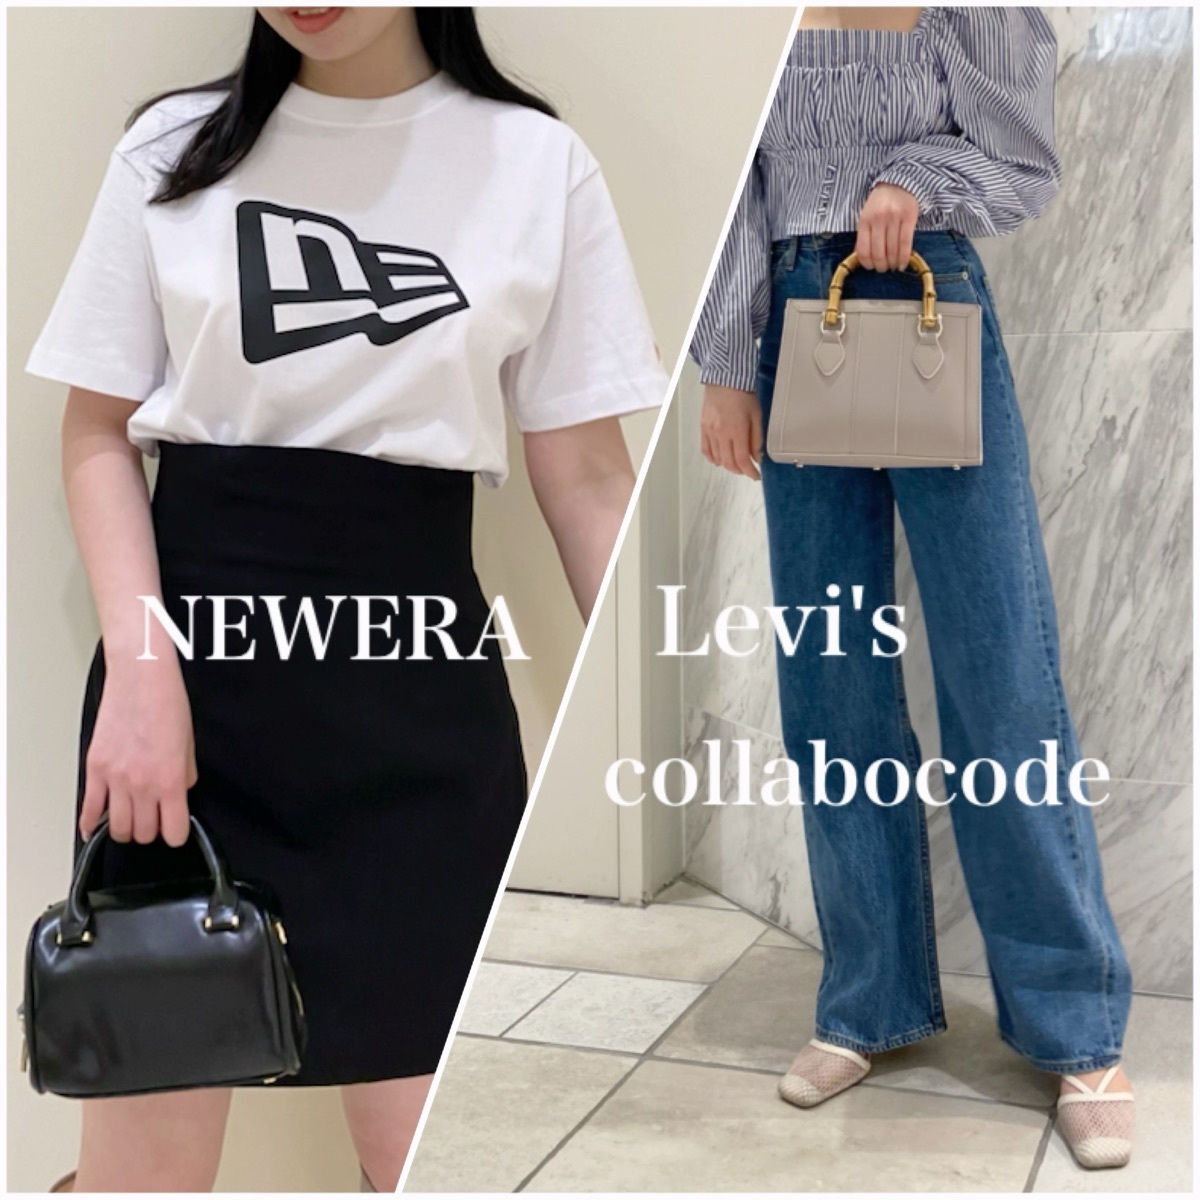 ○NEWERA & Levi's collabocode○